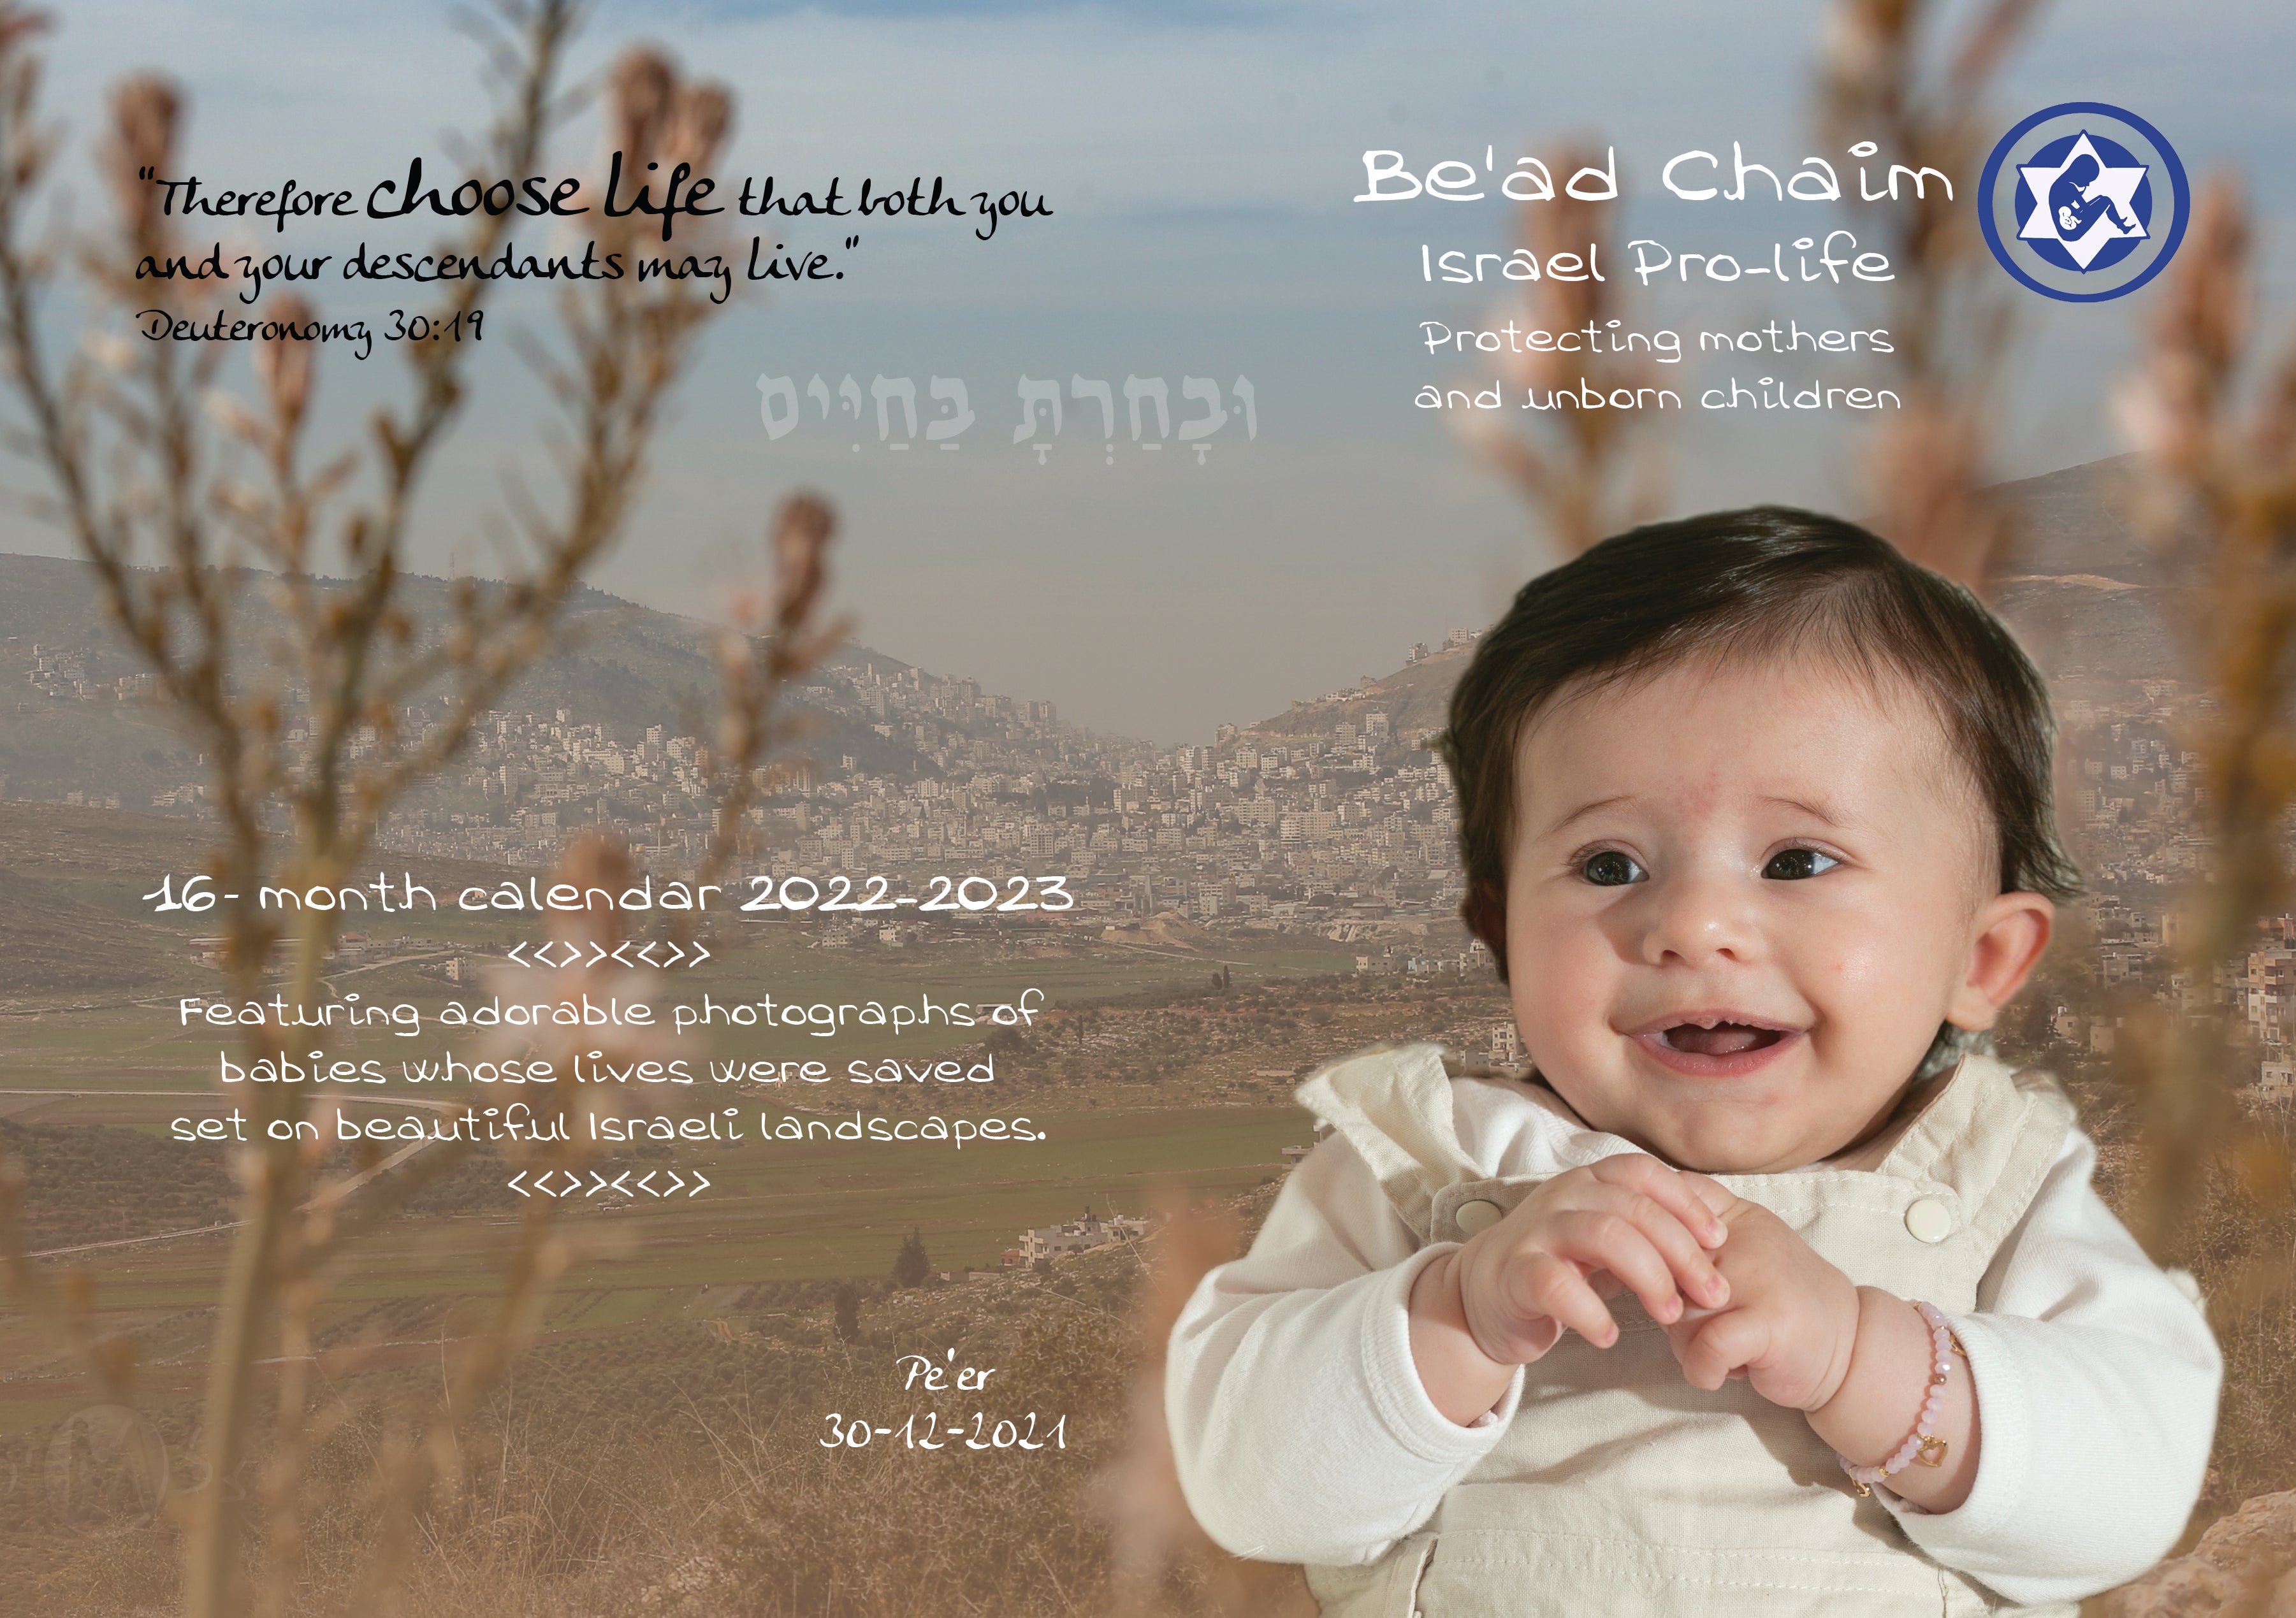 New! Be'ad Chaim Baby Calendar - 2022-2023 product shot